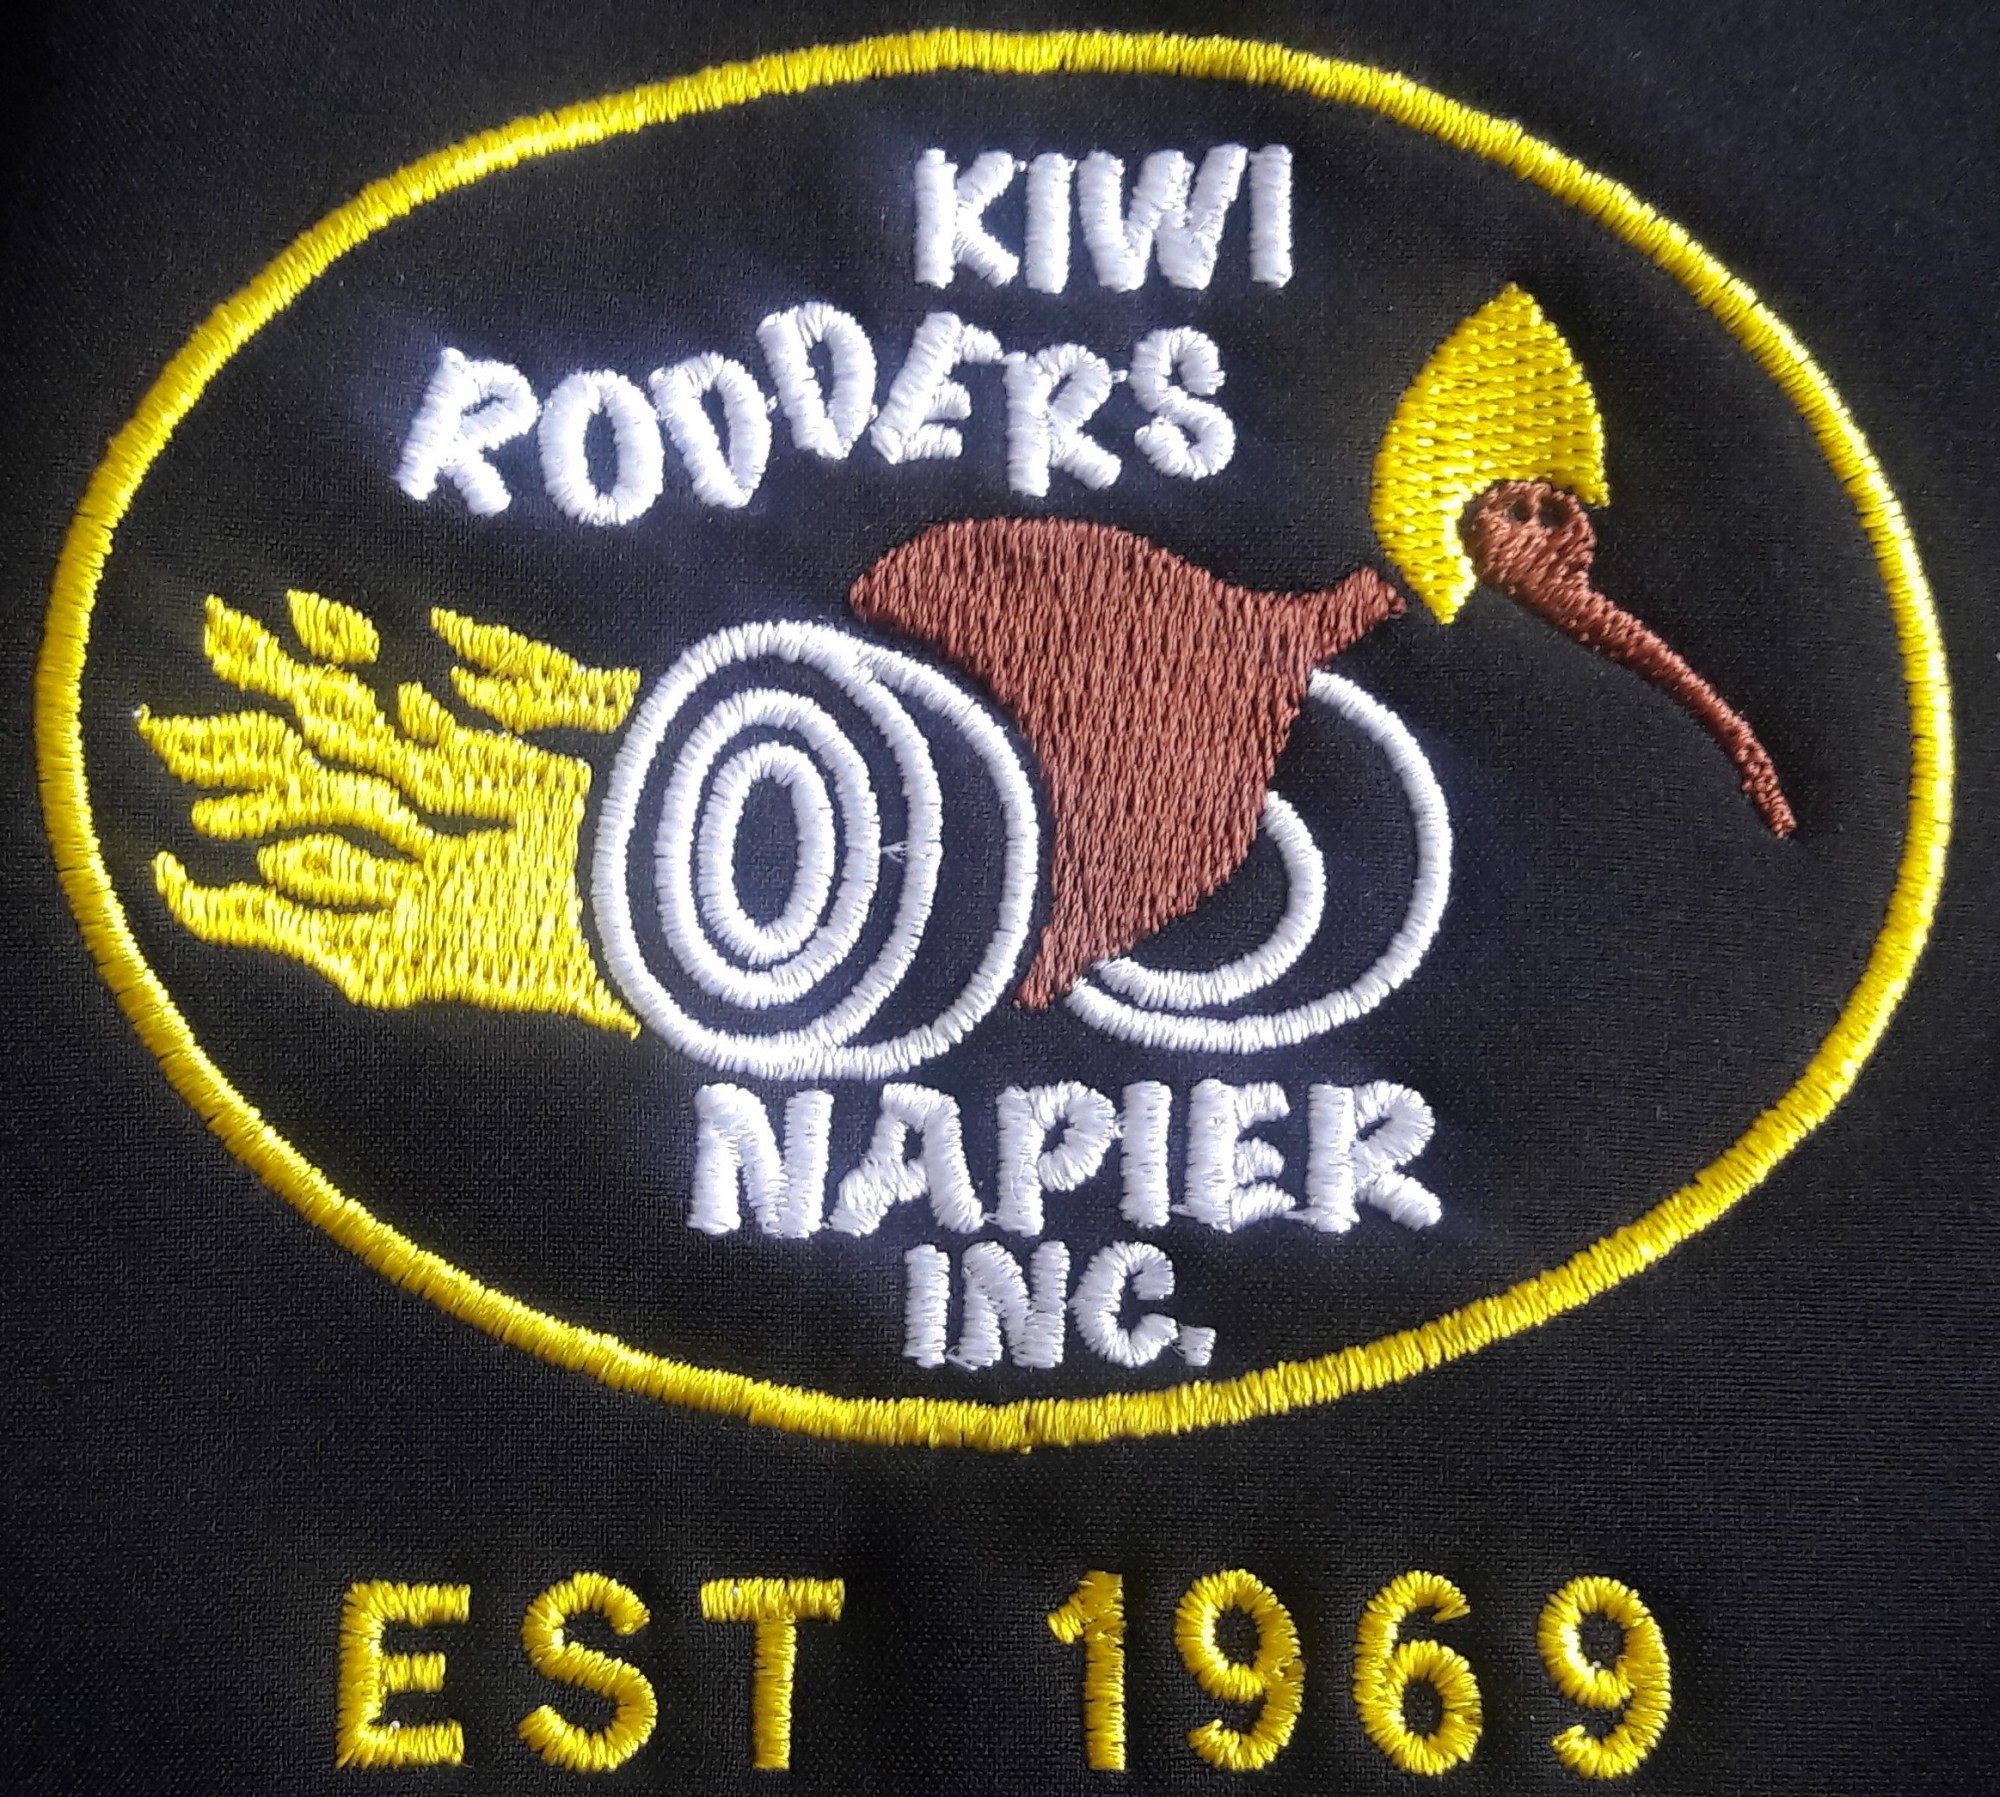 Kiwi Rodders Inc